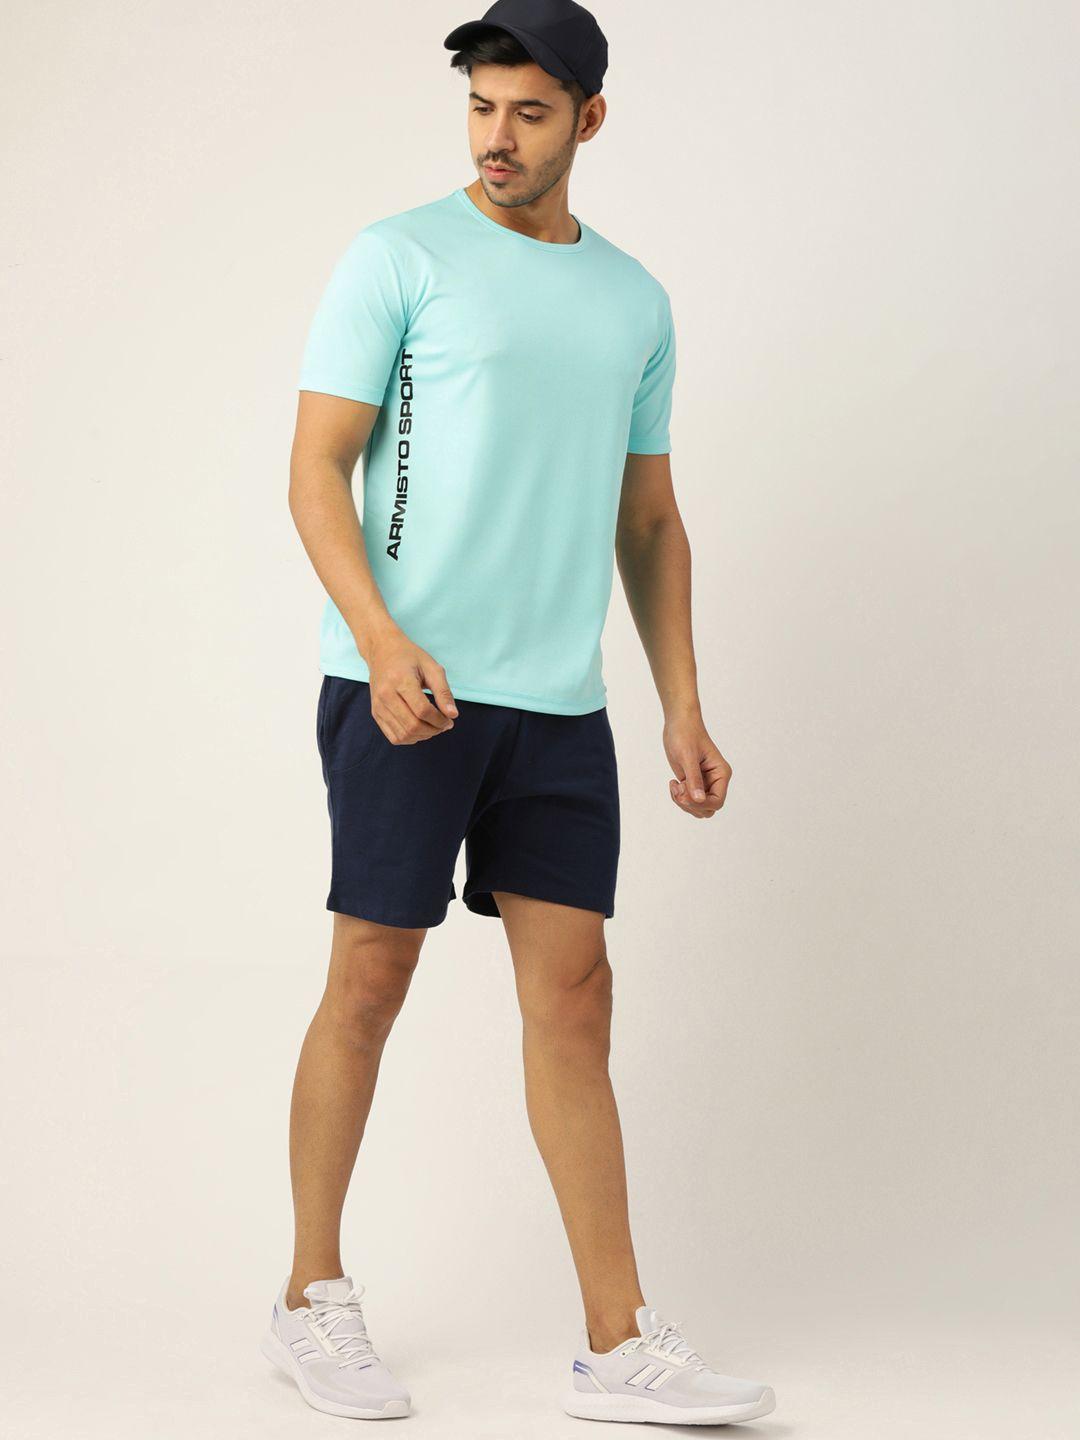 armisto-men-turquoise-blue-brand-logo-dri-fit-solid-sports-t-shirt